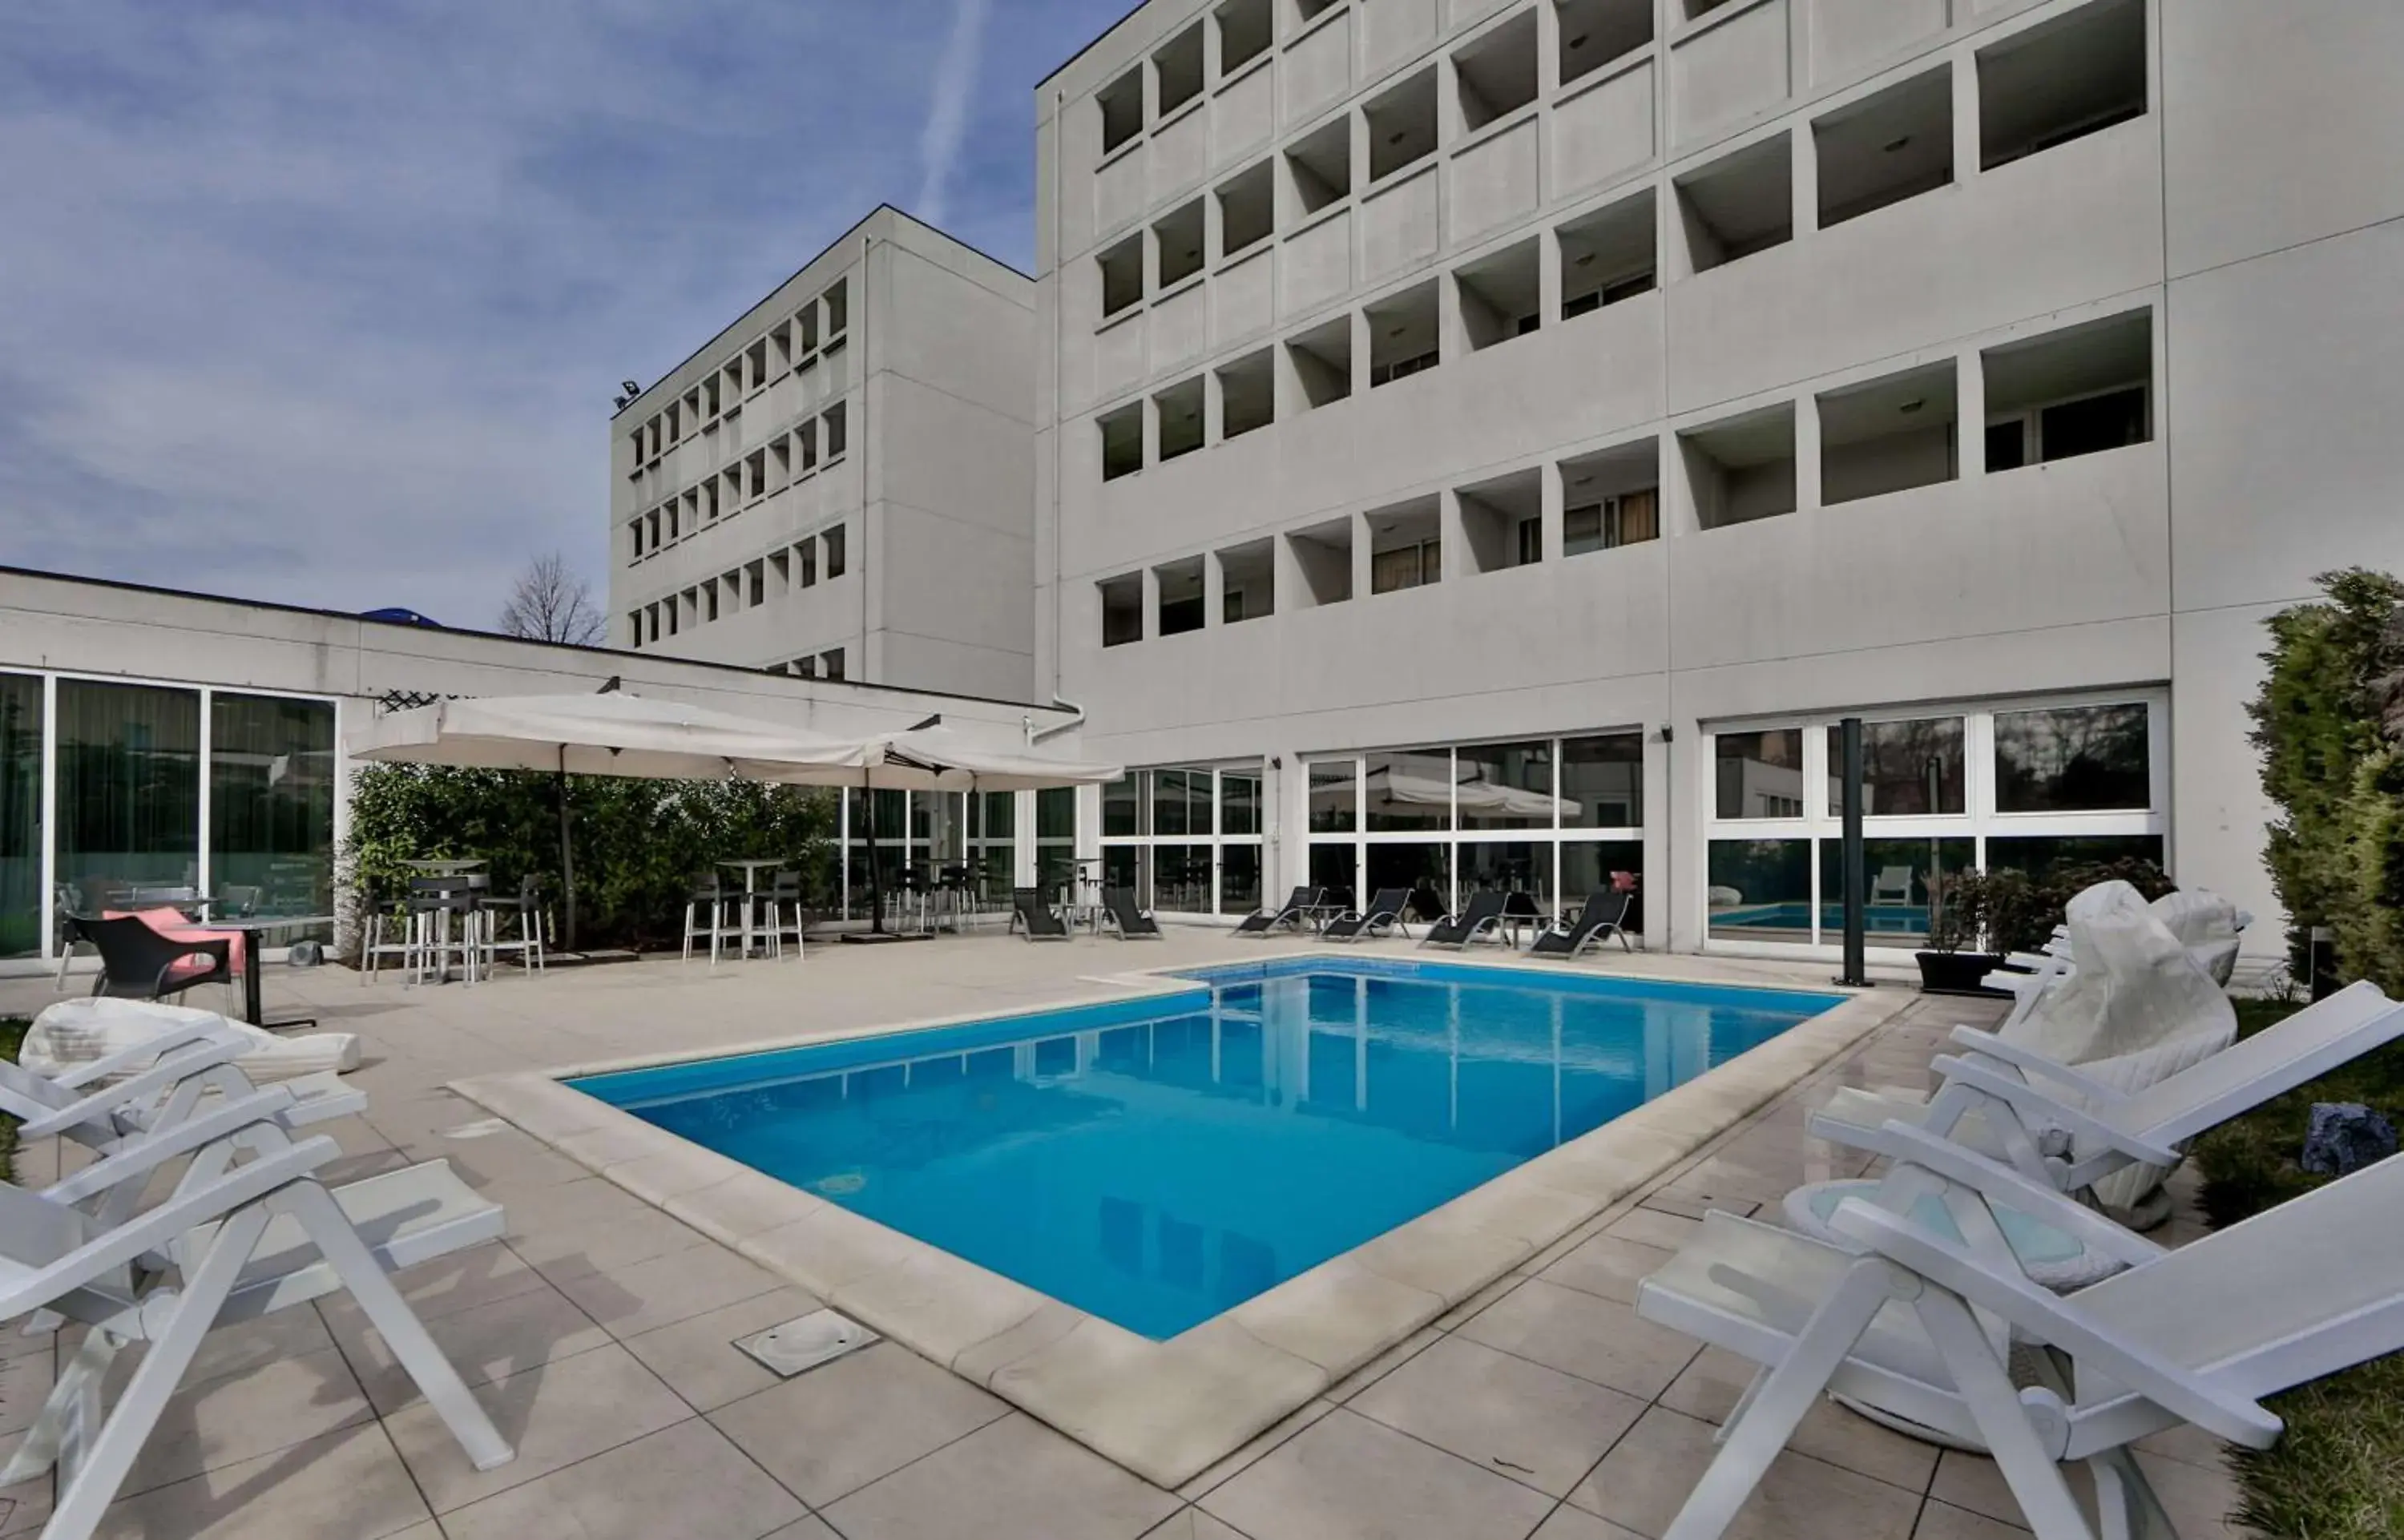 On site, Swimming Pool in Best Western Plus Hotel Farnese